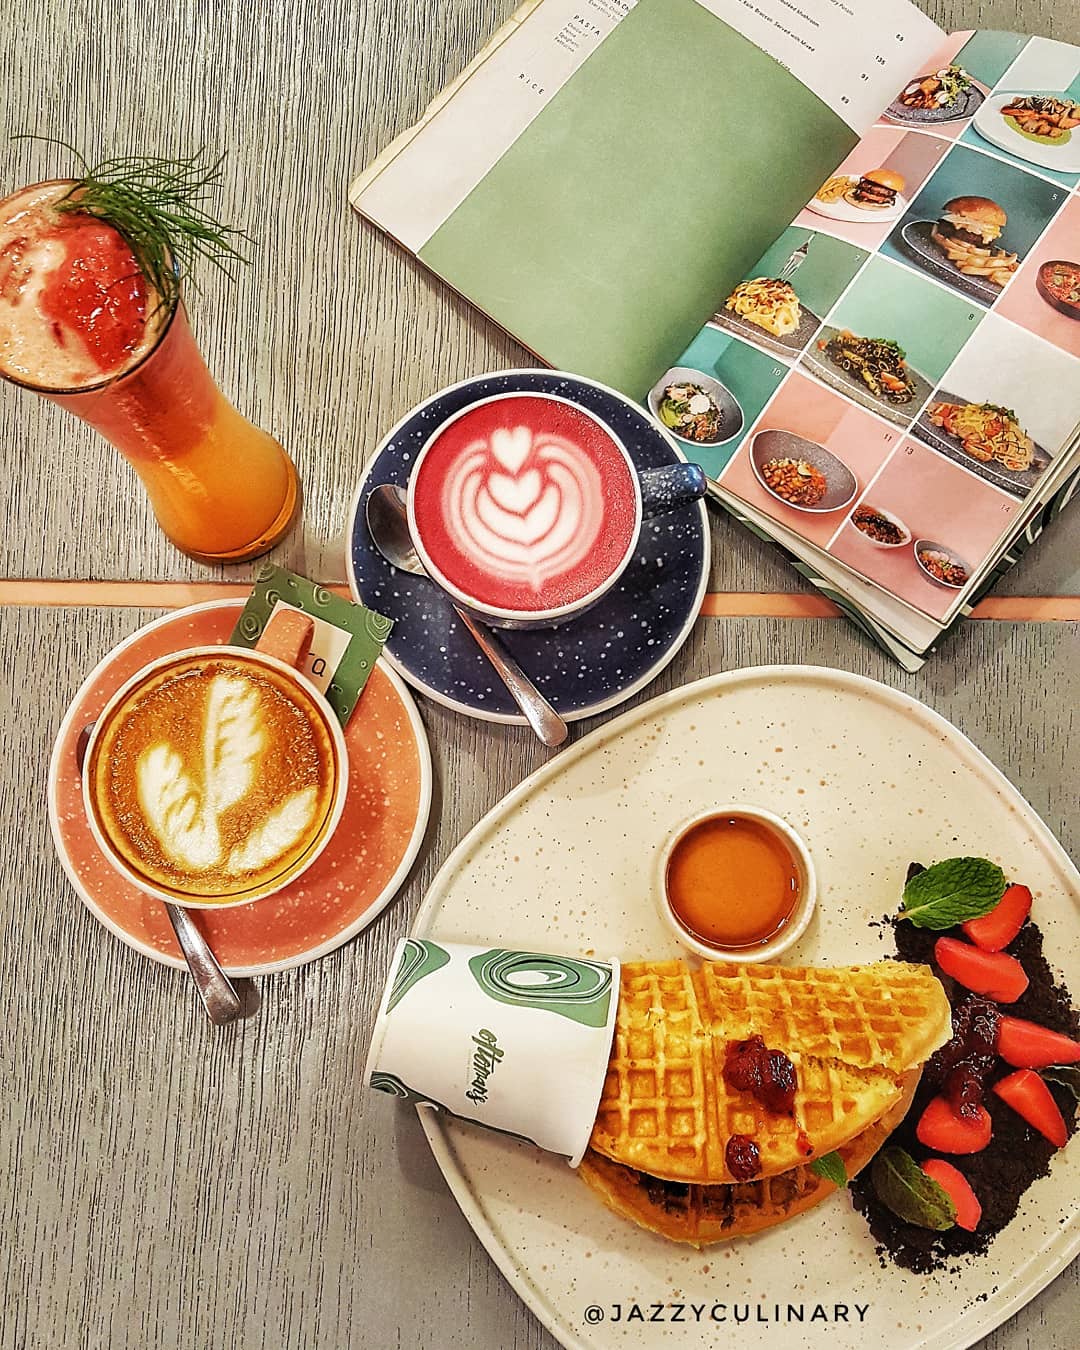 Ottoman’s Coffee Sopo Del Kafe Nuansa Pink yang Instagramable Jakarta 